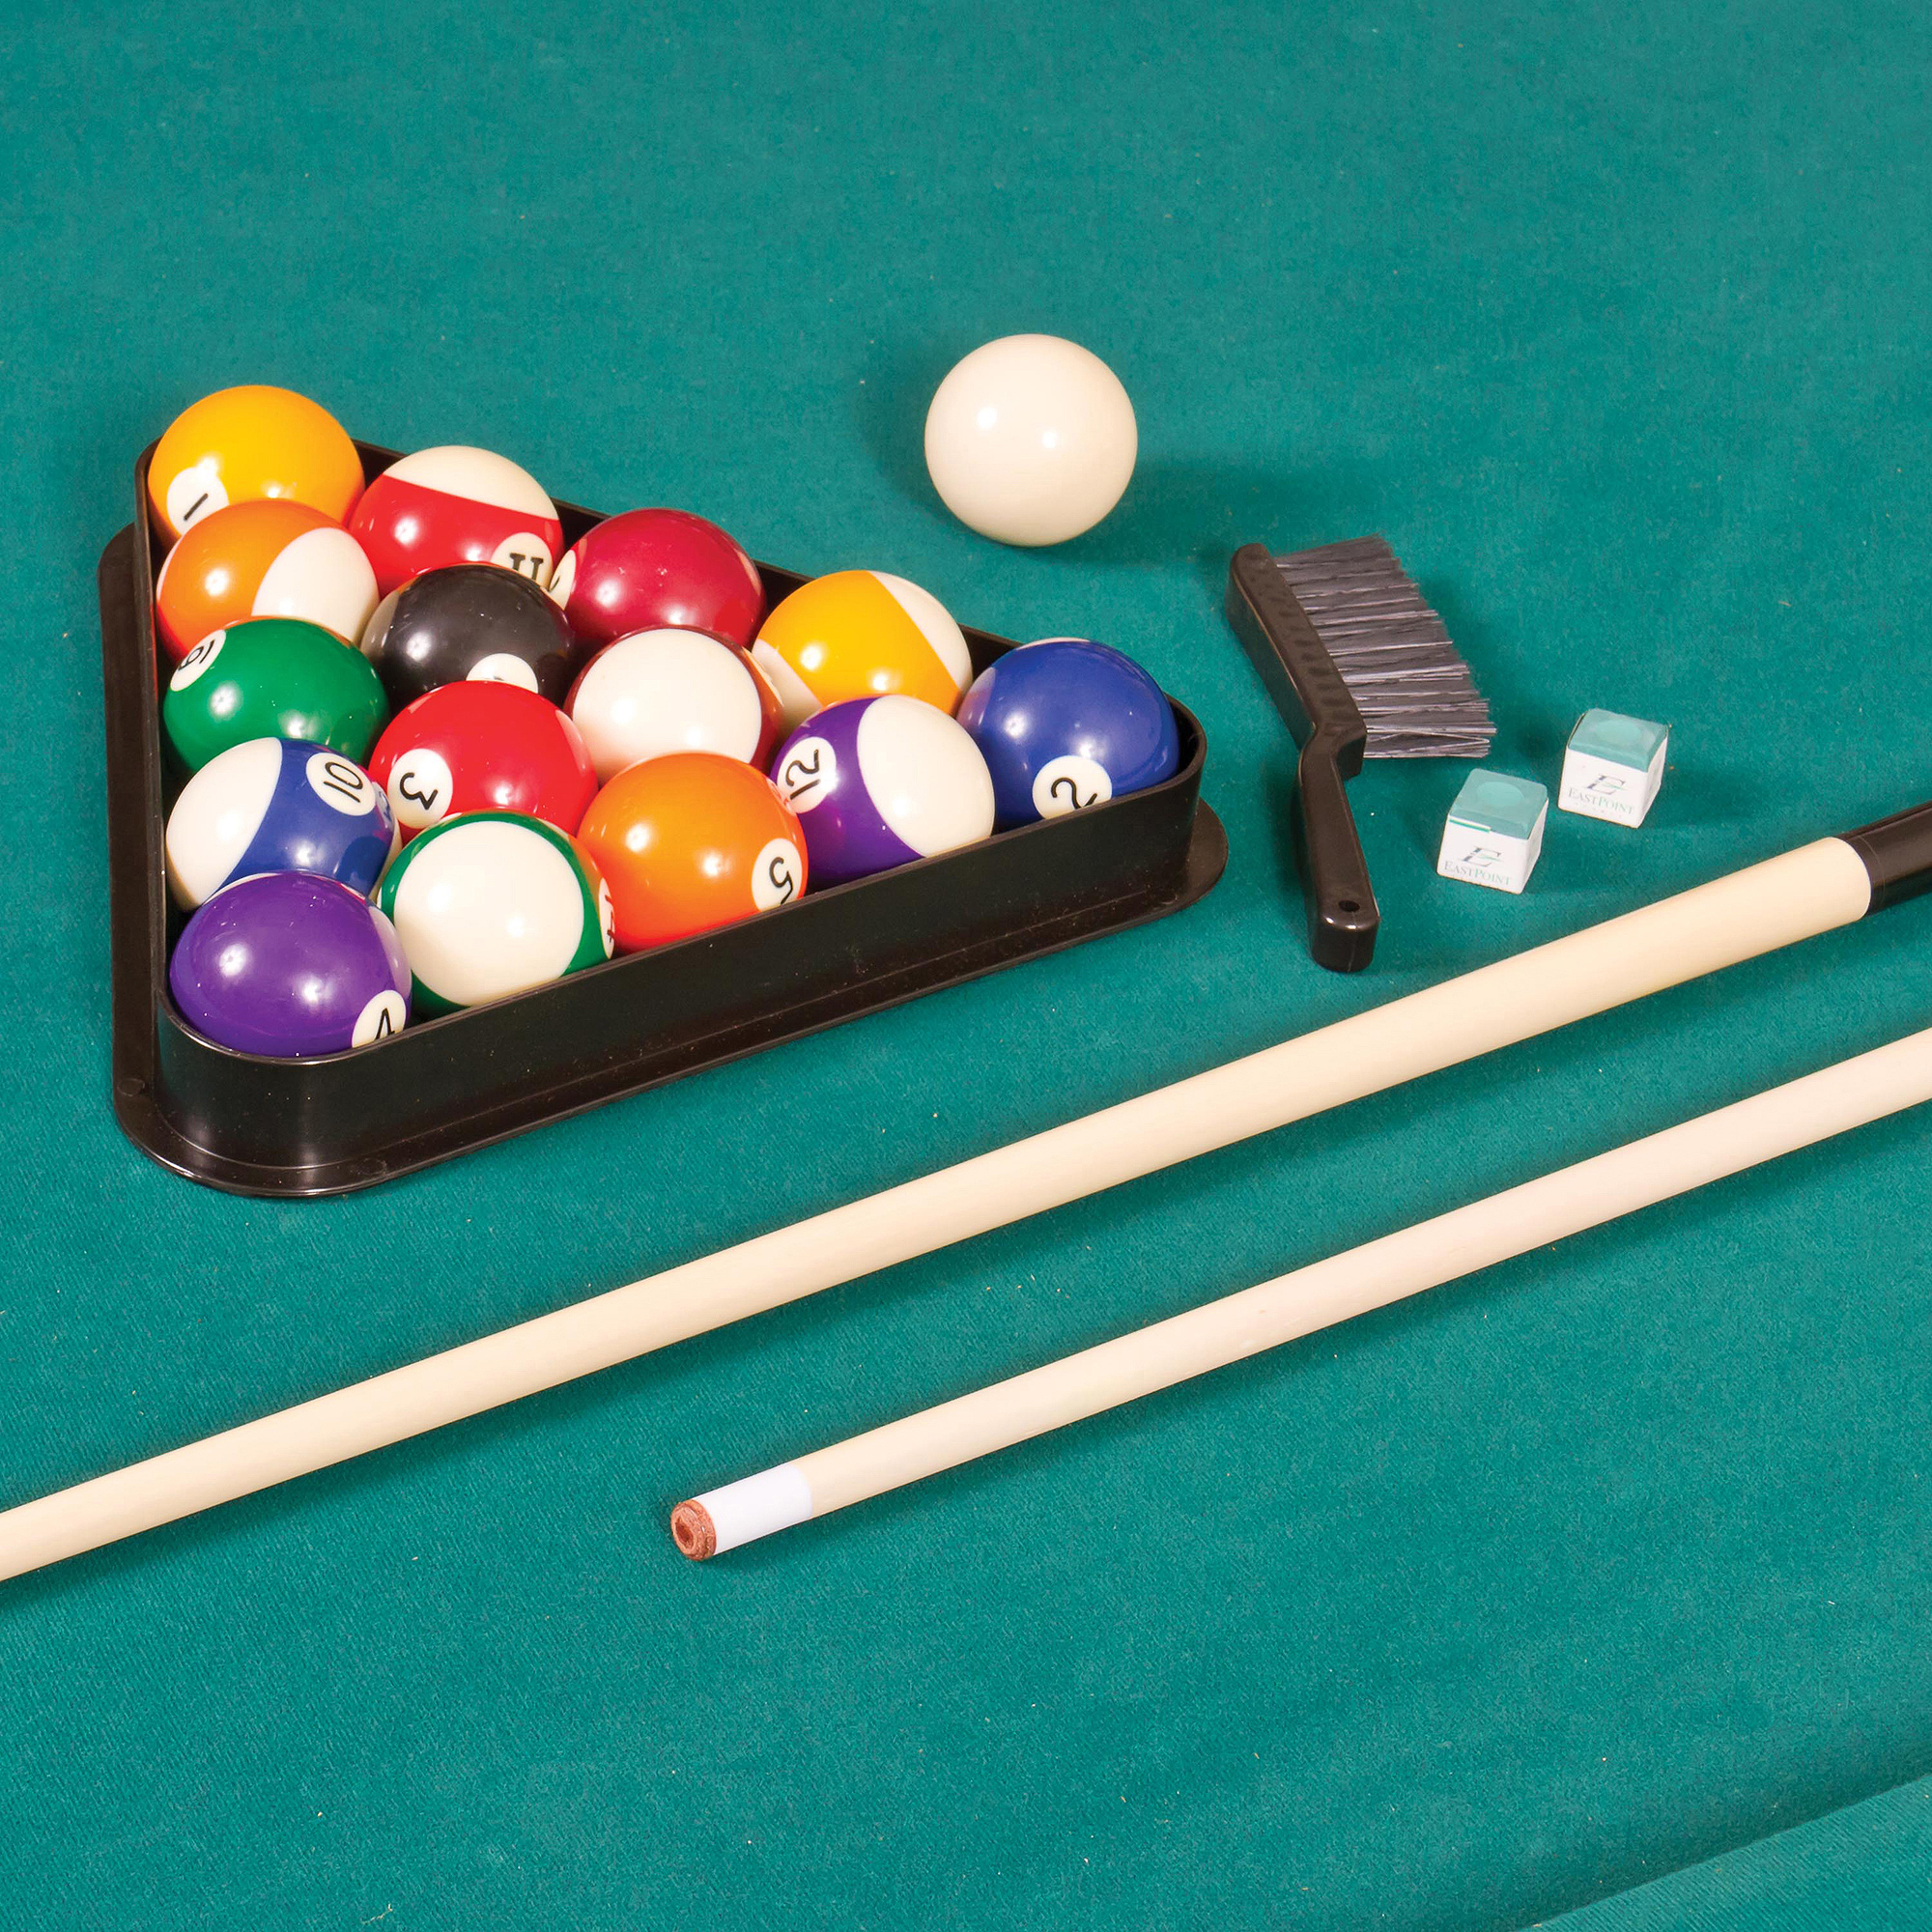 EastPoint Sports 87-Inch Brighton Billiard Pool Table, Green ...